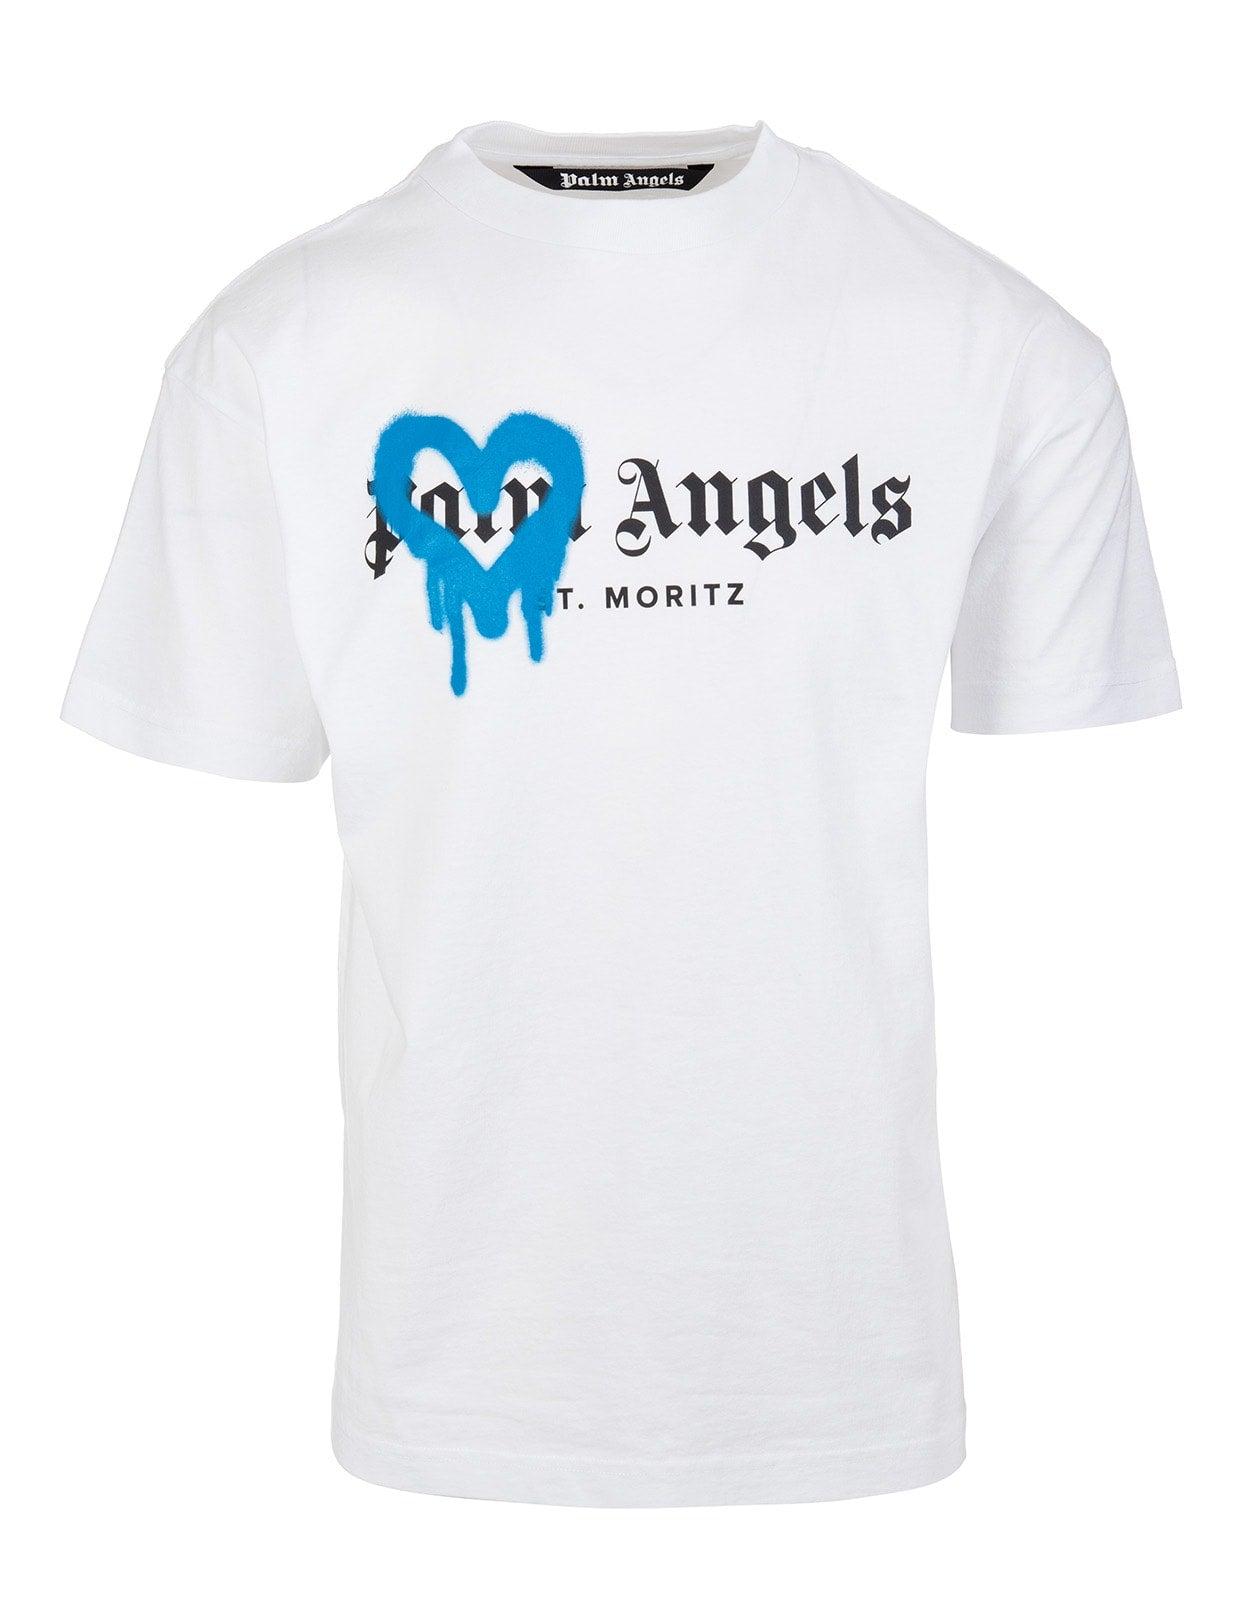 palm angels t shirt blue